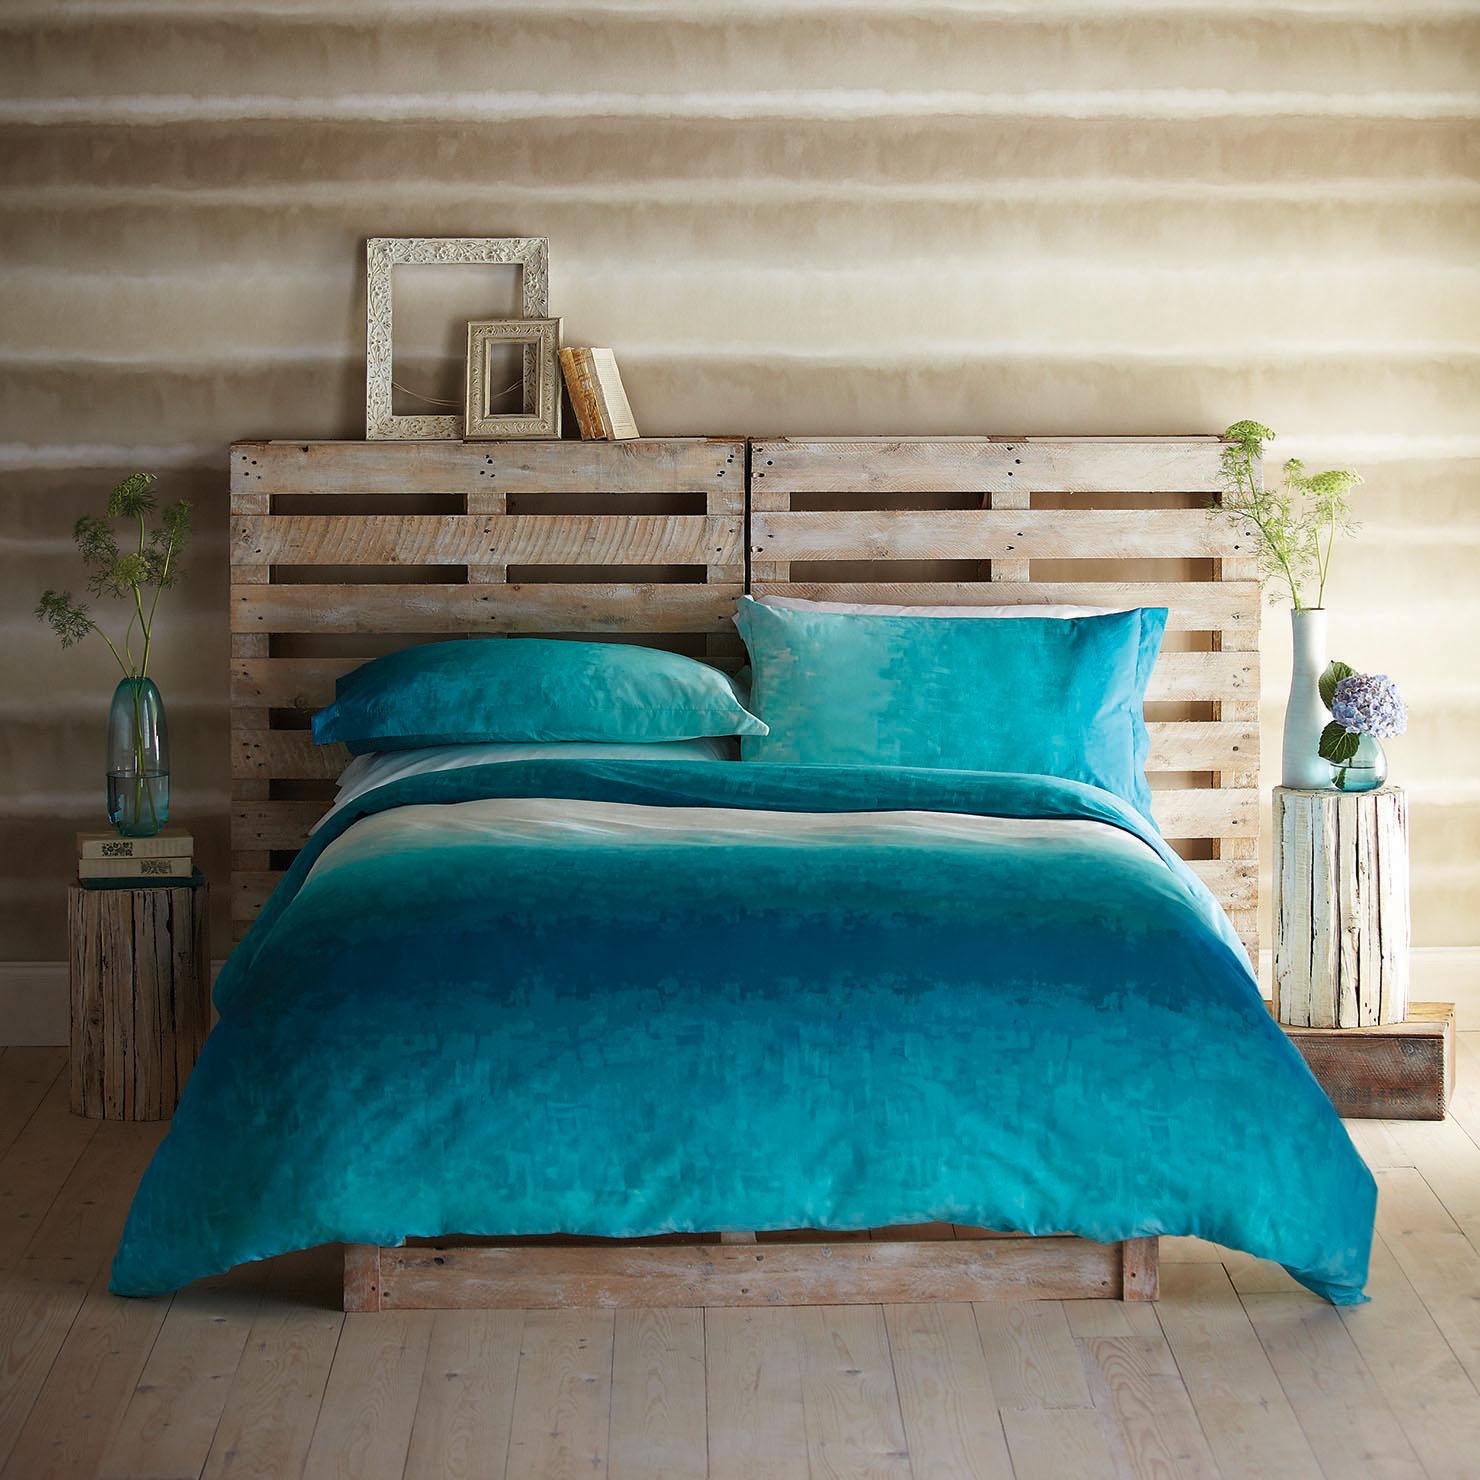 cama hecha con palets